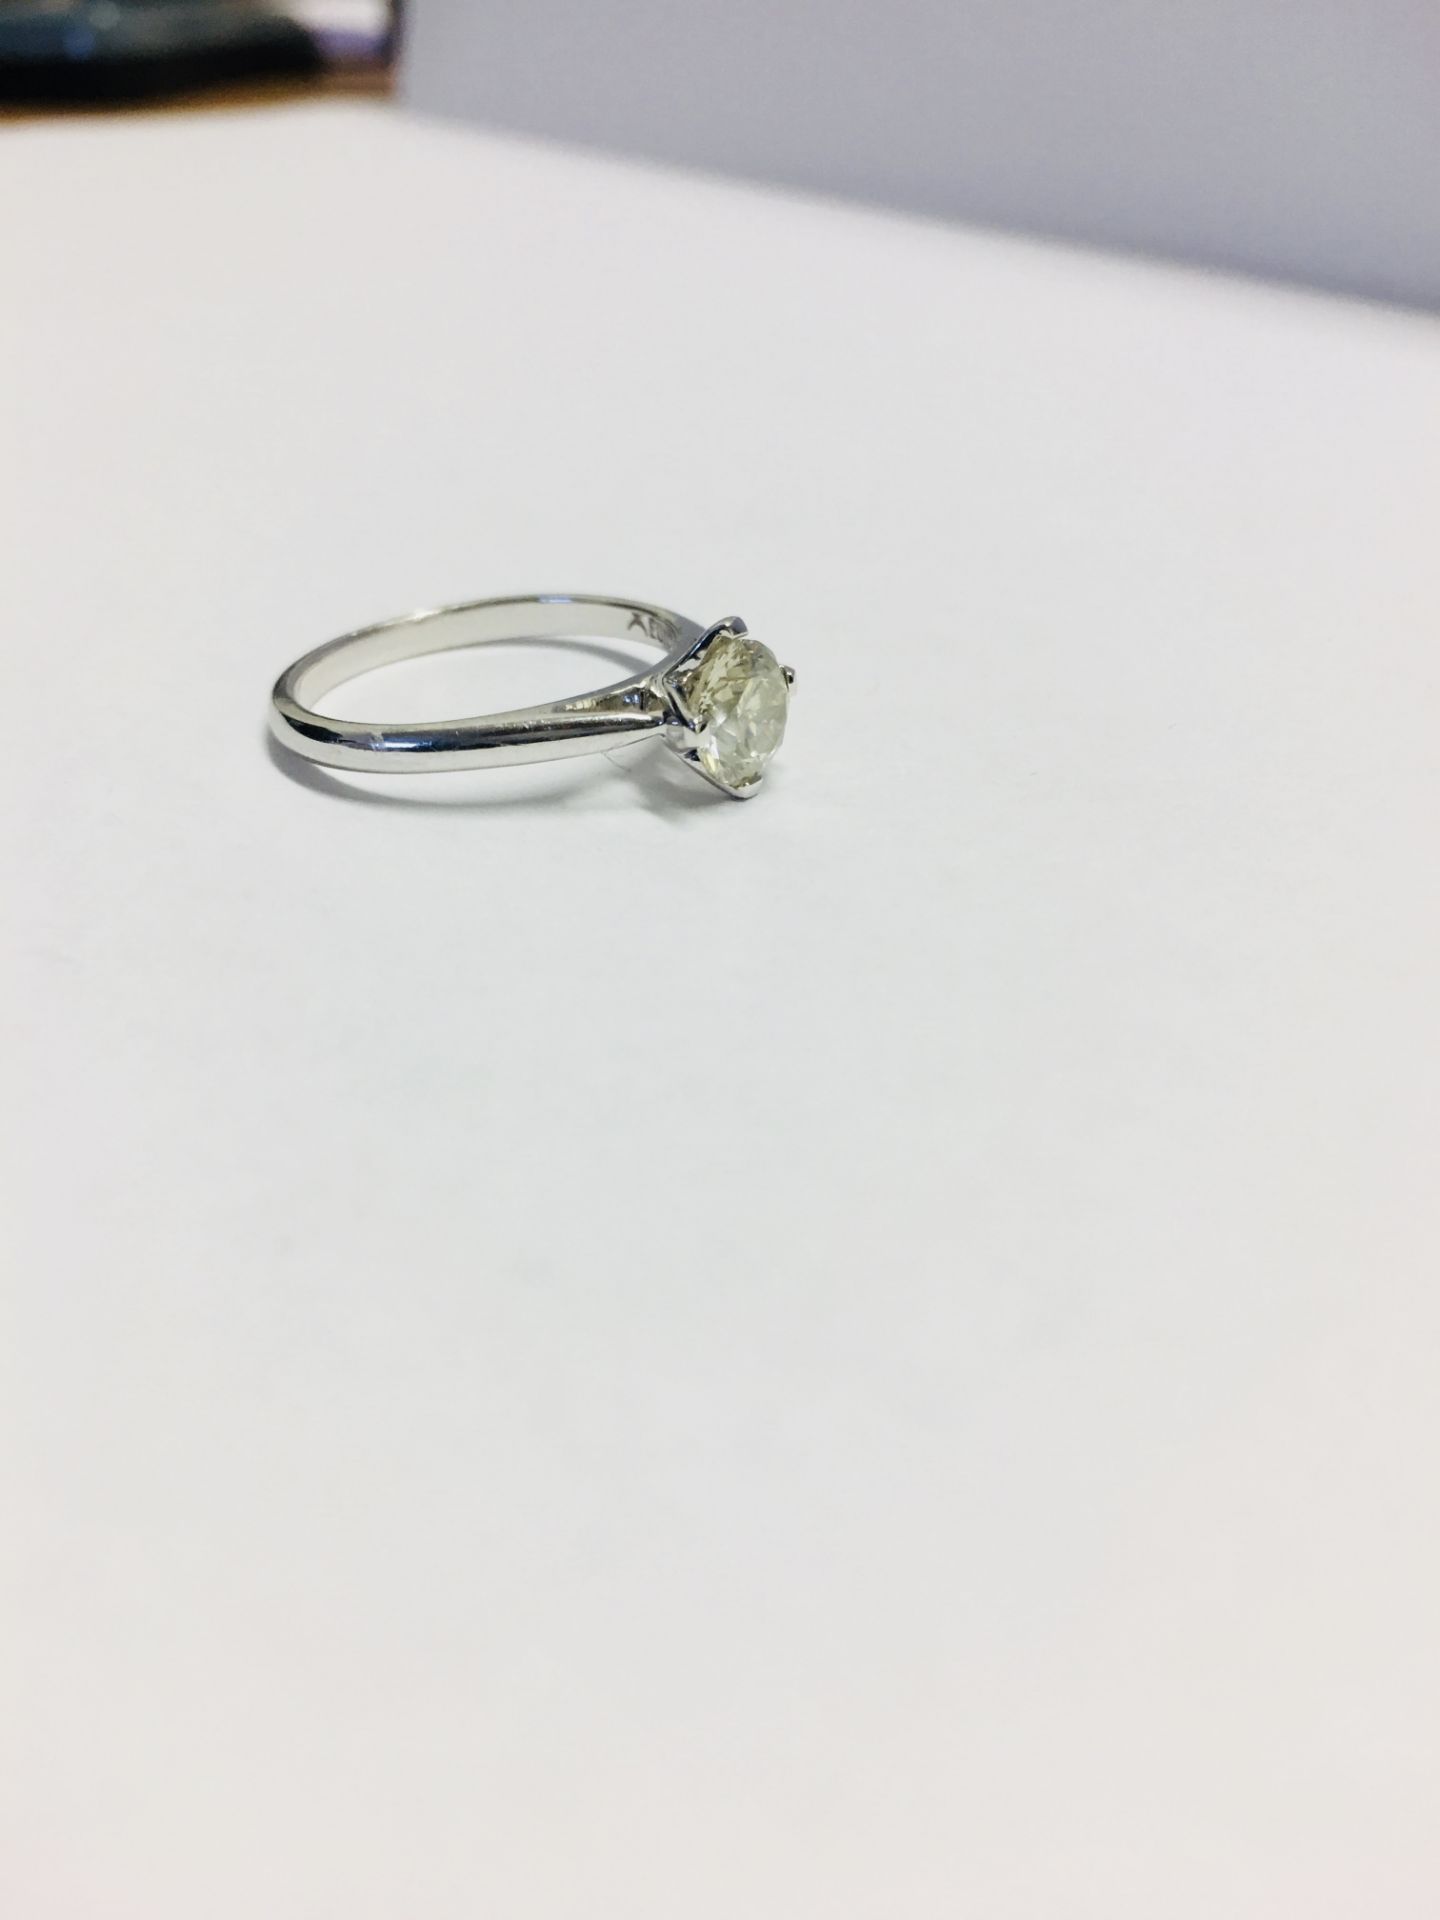 1Ct Brilliant Cut Diamond Solitaire Ring, - Image 3 of 4